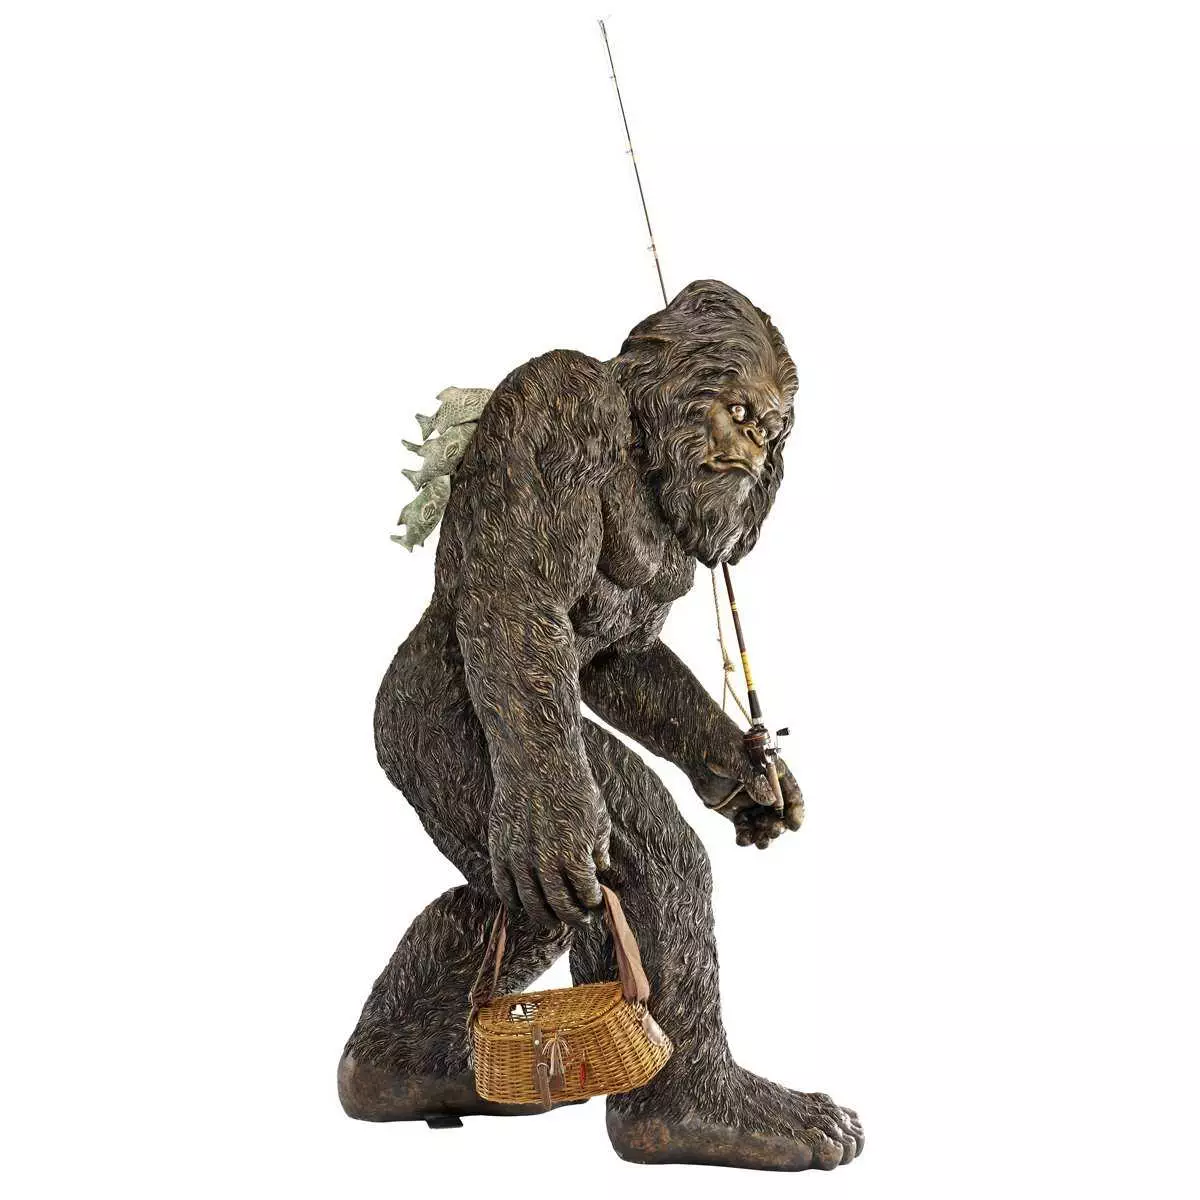 Bigfoot Statue Holding A Fishing Kit